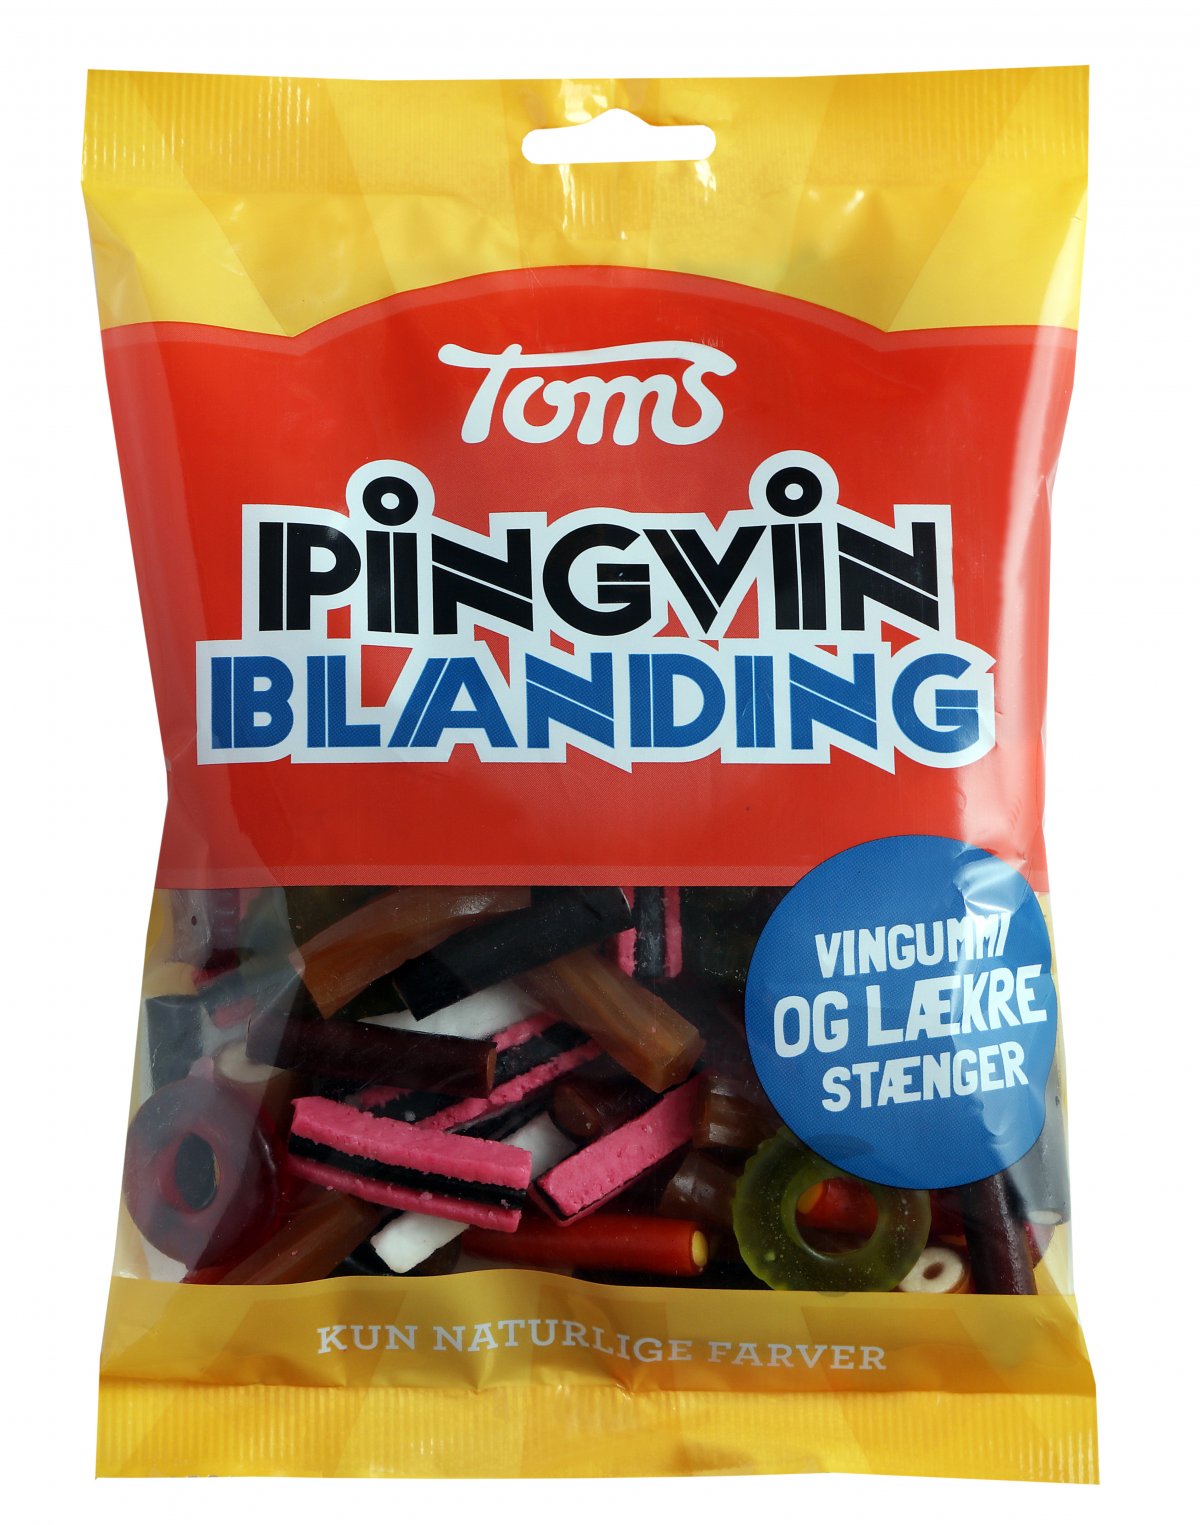 Pingvin Blanding 375 g - Popup-toms.dk